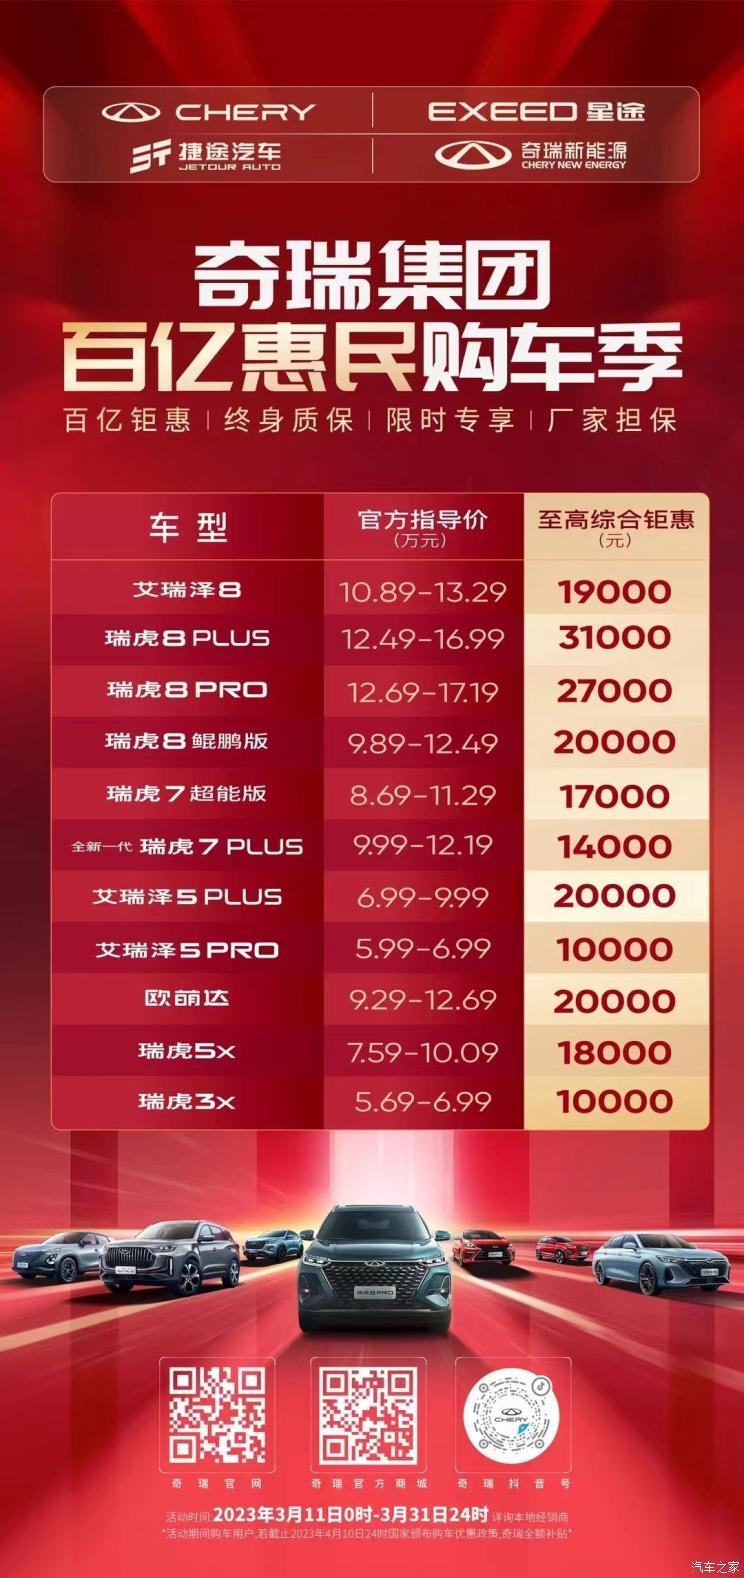 Скидка до 42 888 юаней Chery Group запускает официальную прямую скидку